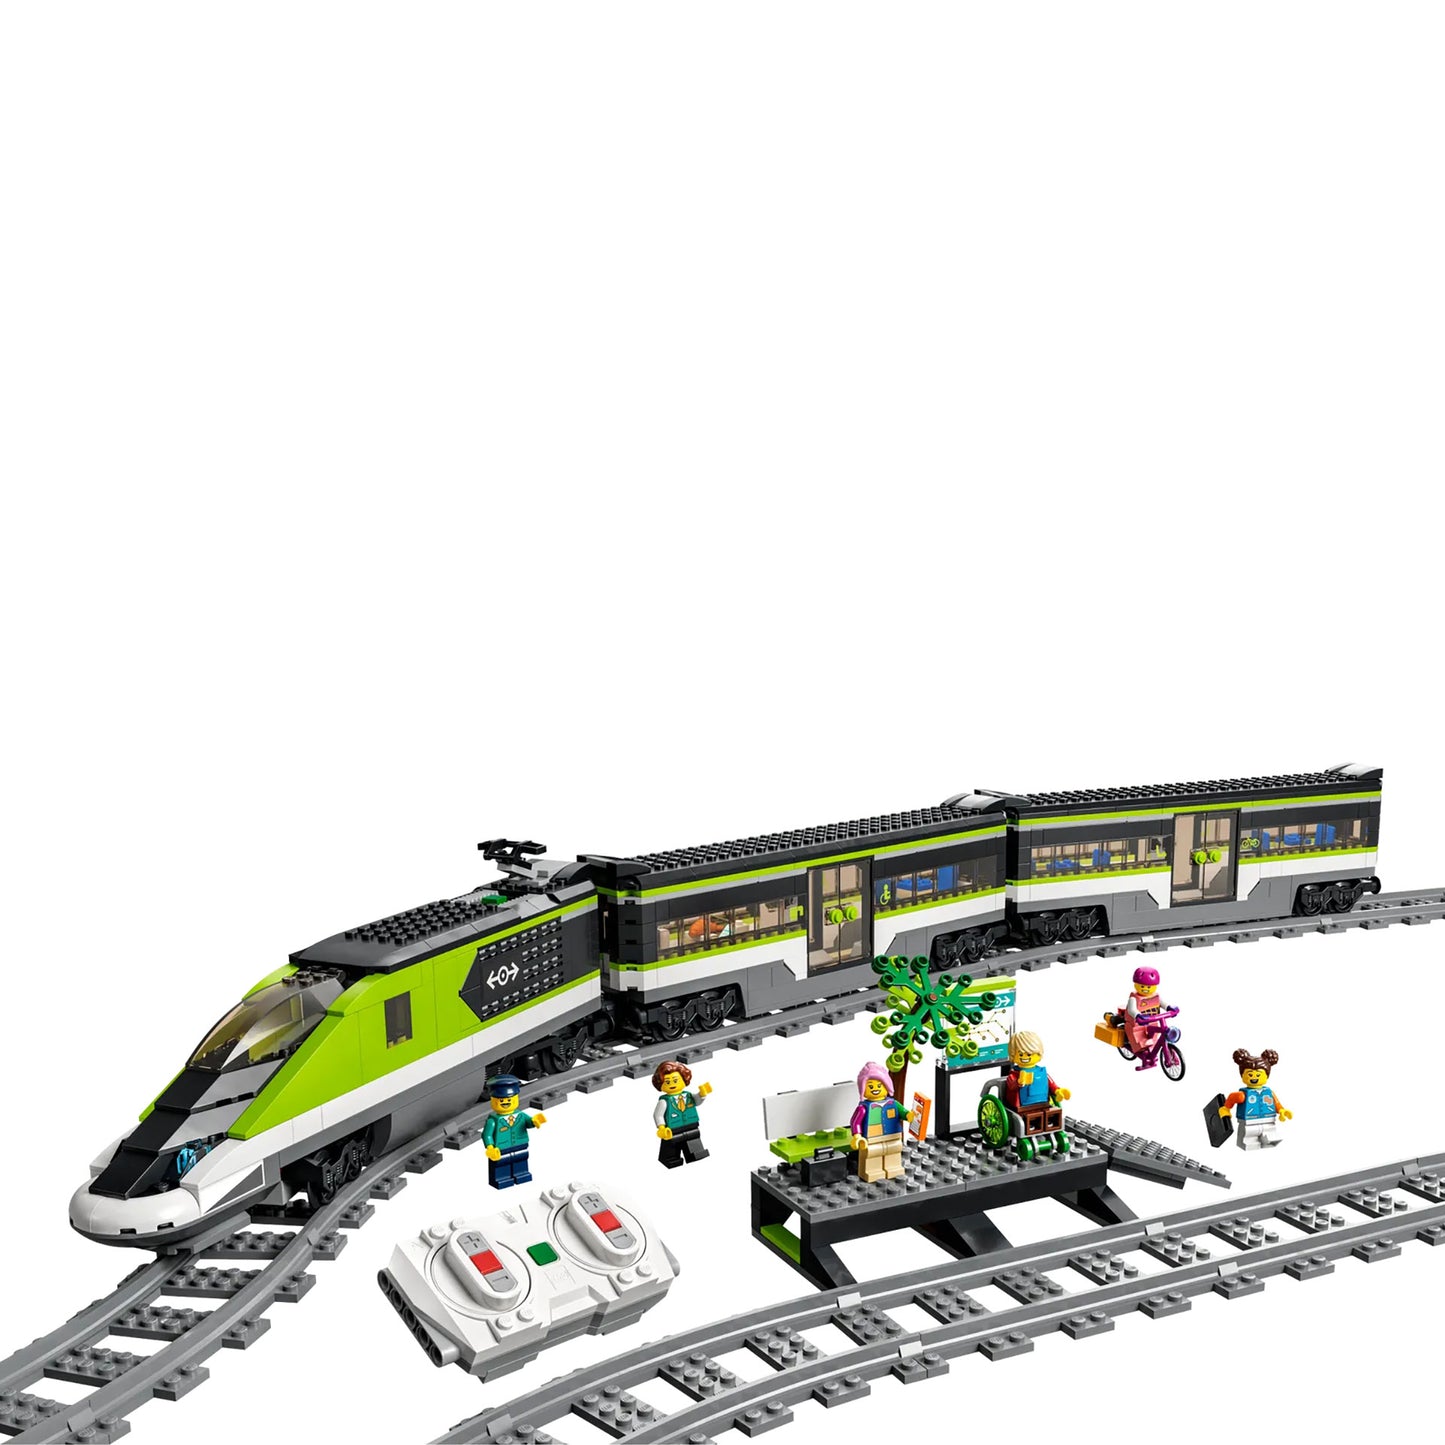 LEGO Express Passenger Train